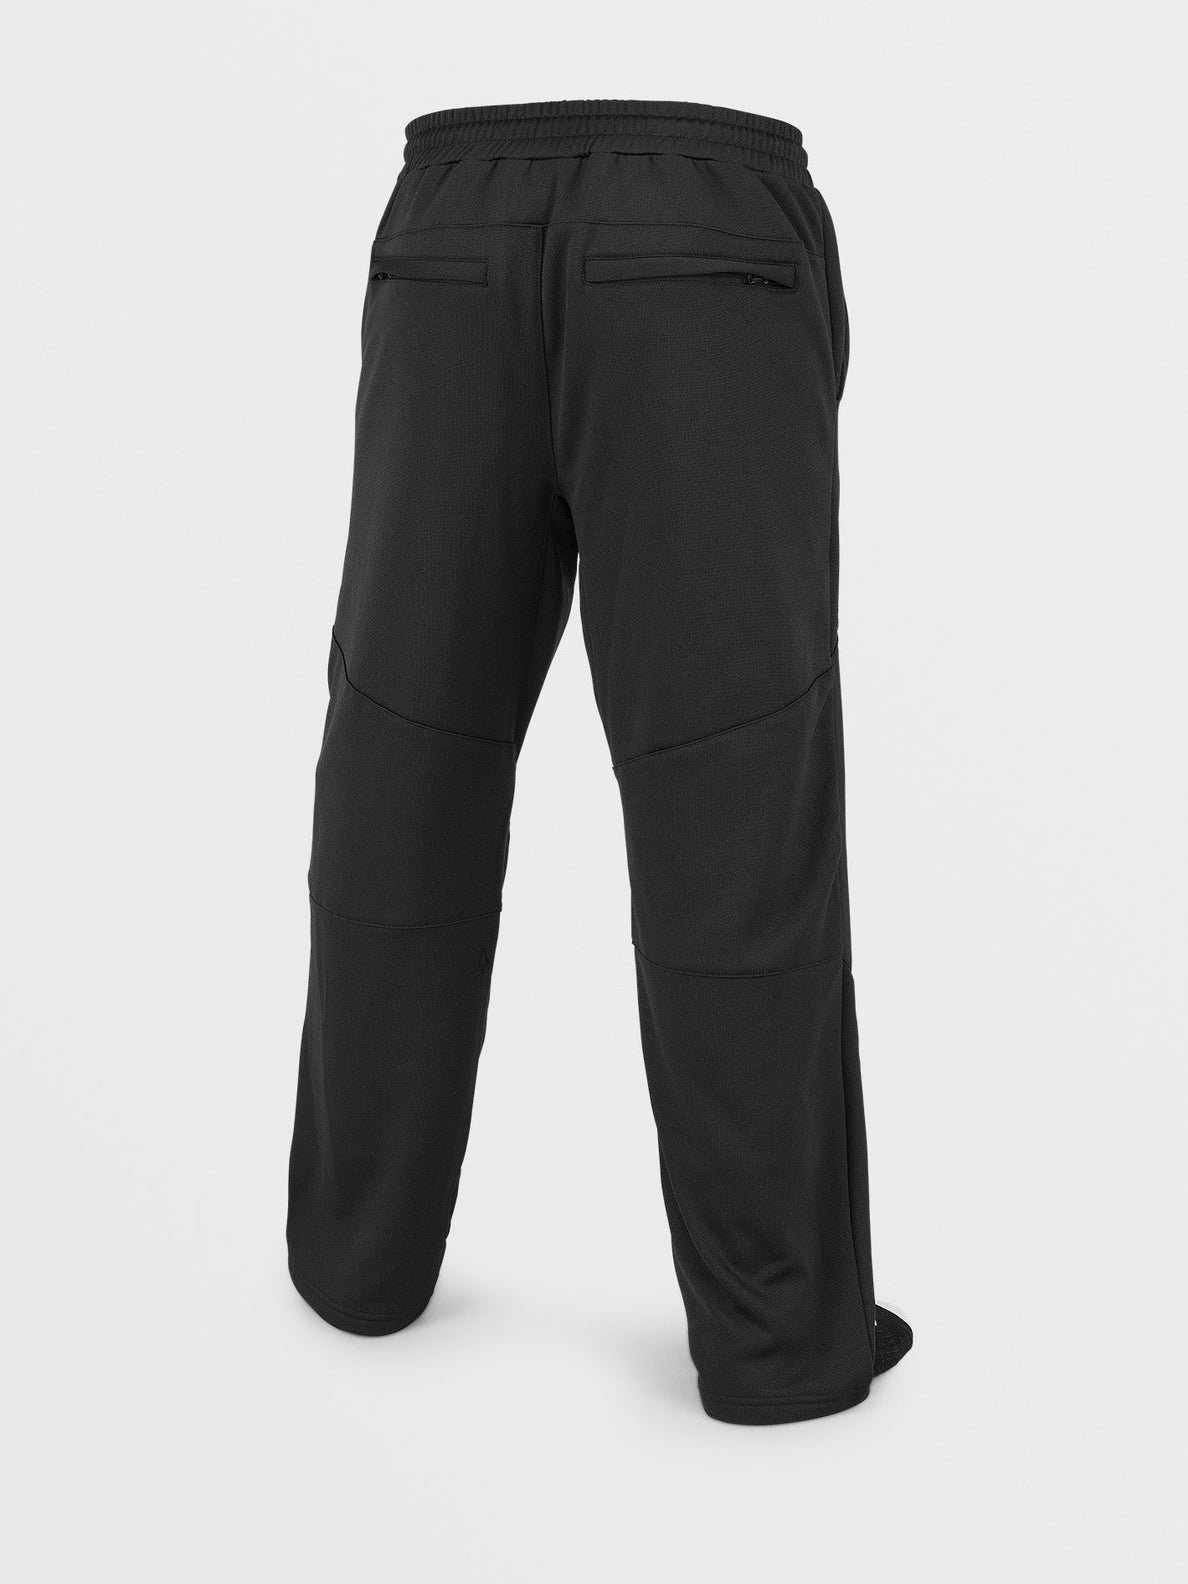 Mens Tech Fleece Pants - Black